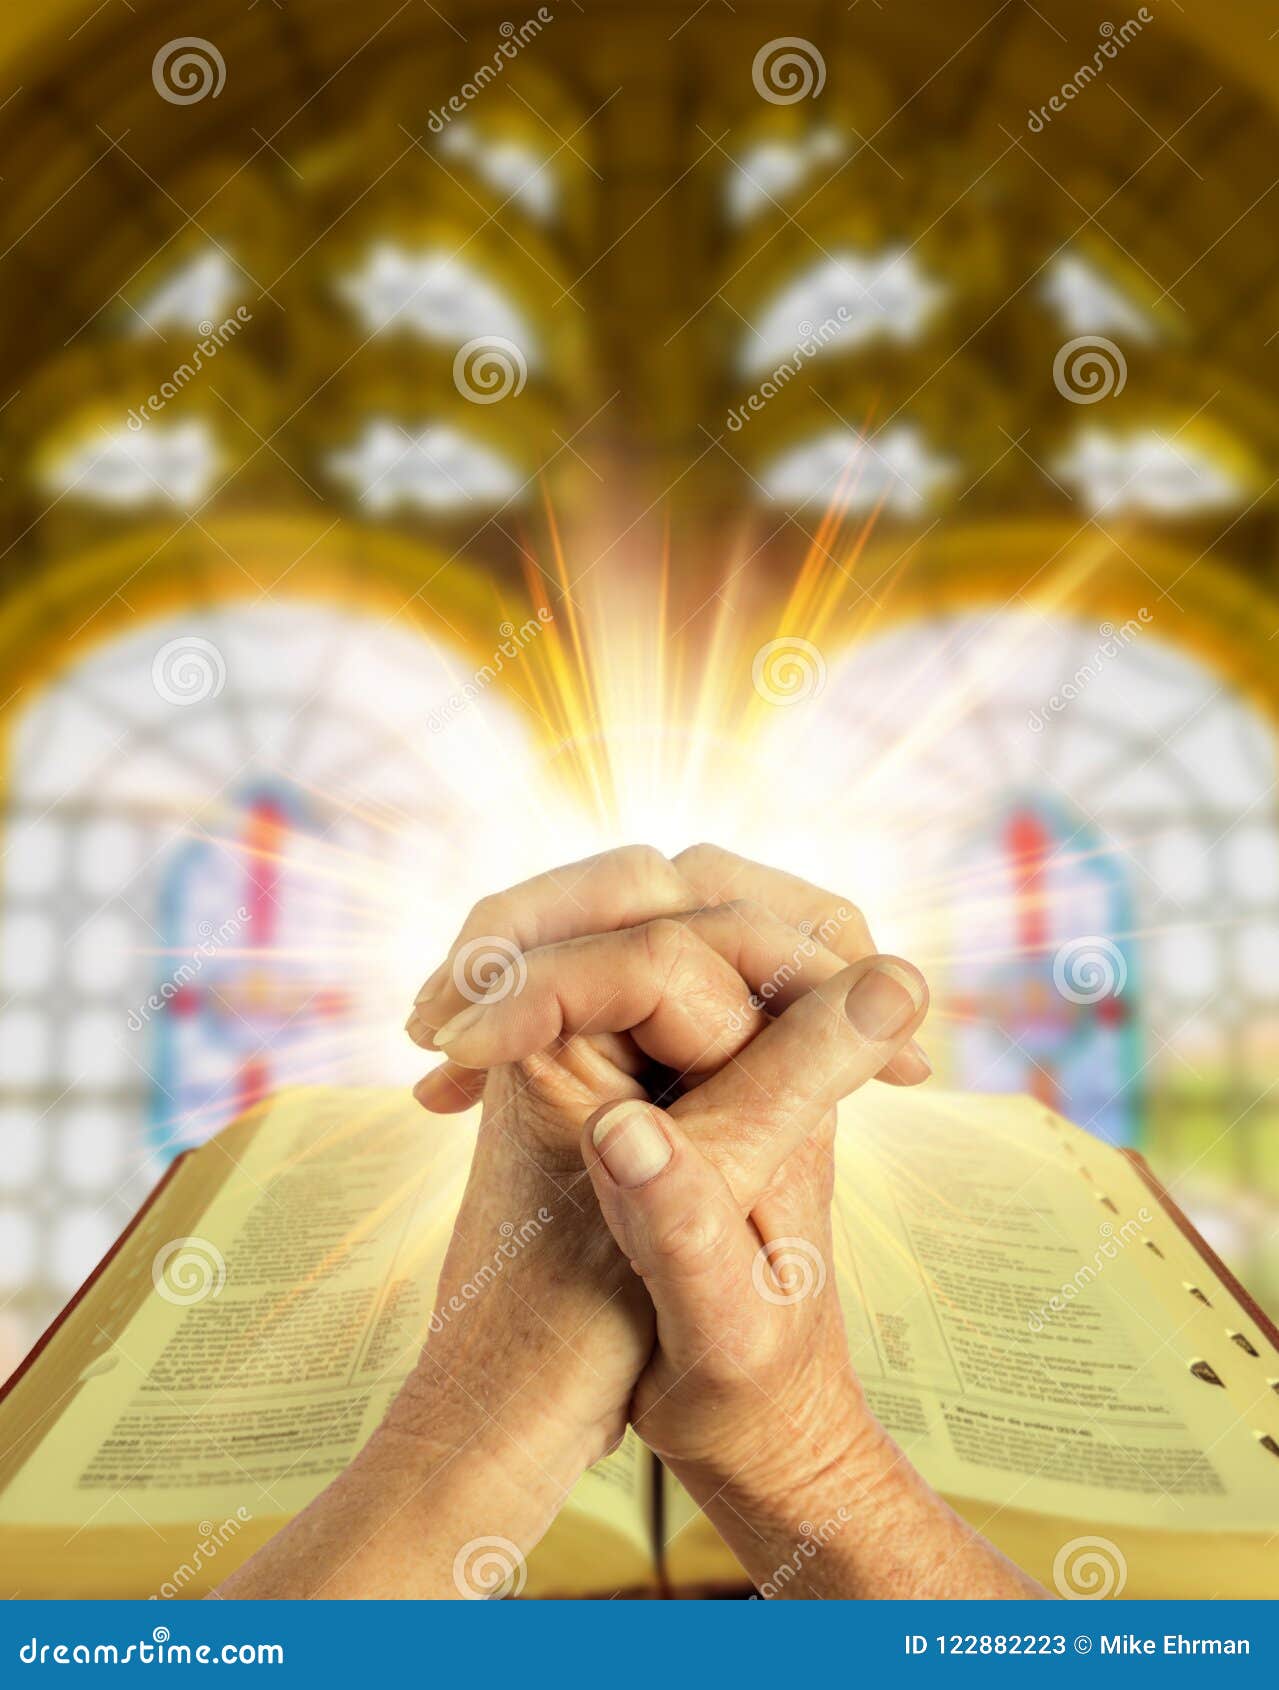 Praying Hands with Bible and Sunburst Background Stock Image - Image of  jesus, shining: 122882223